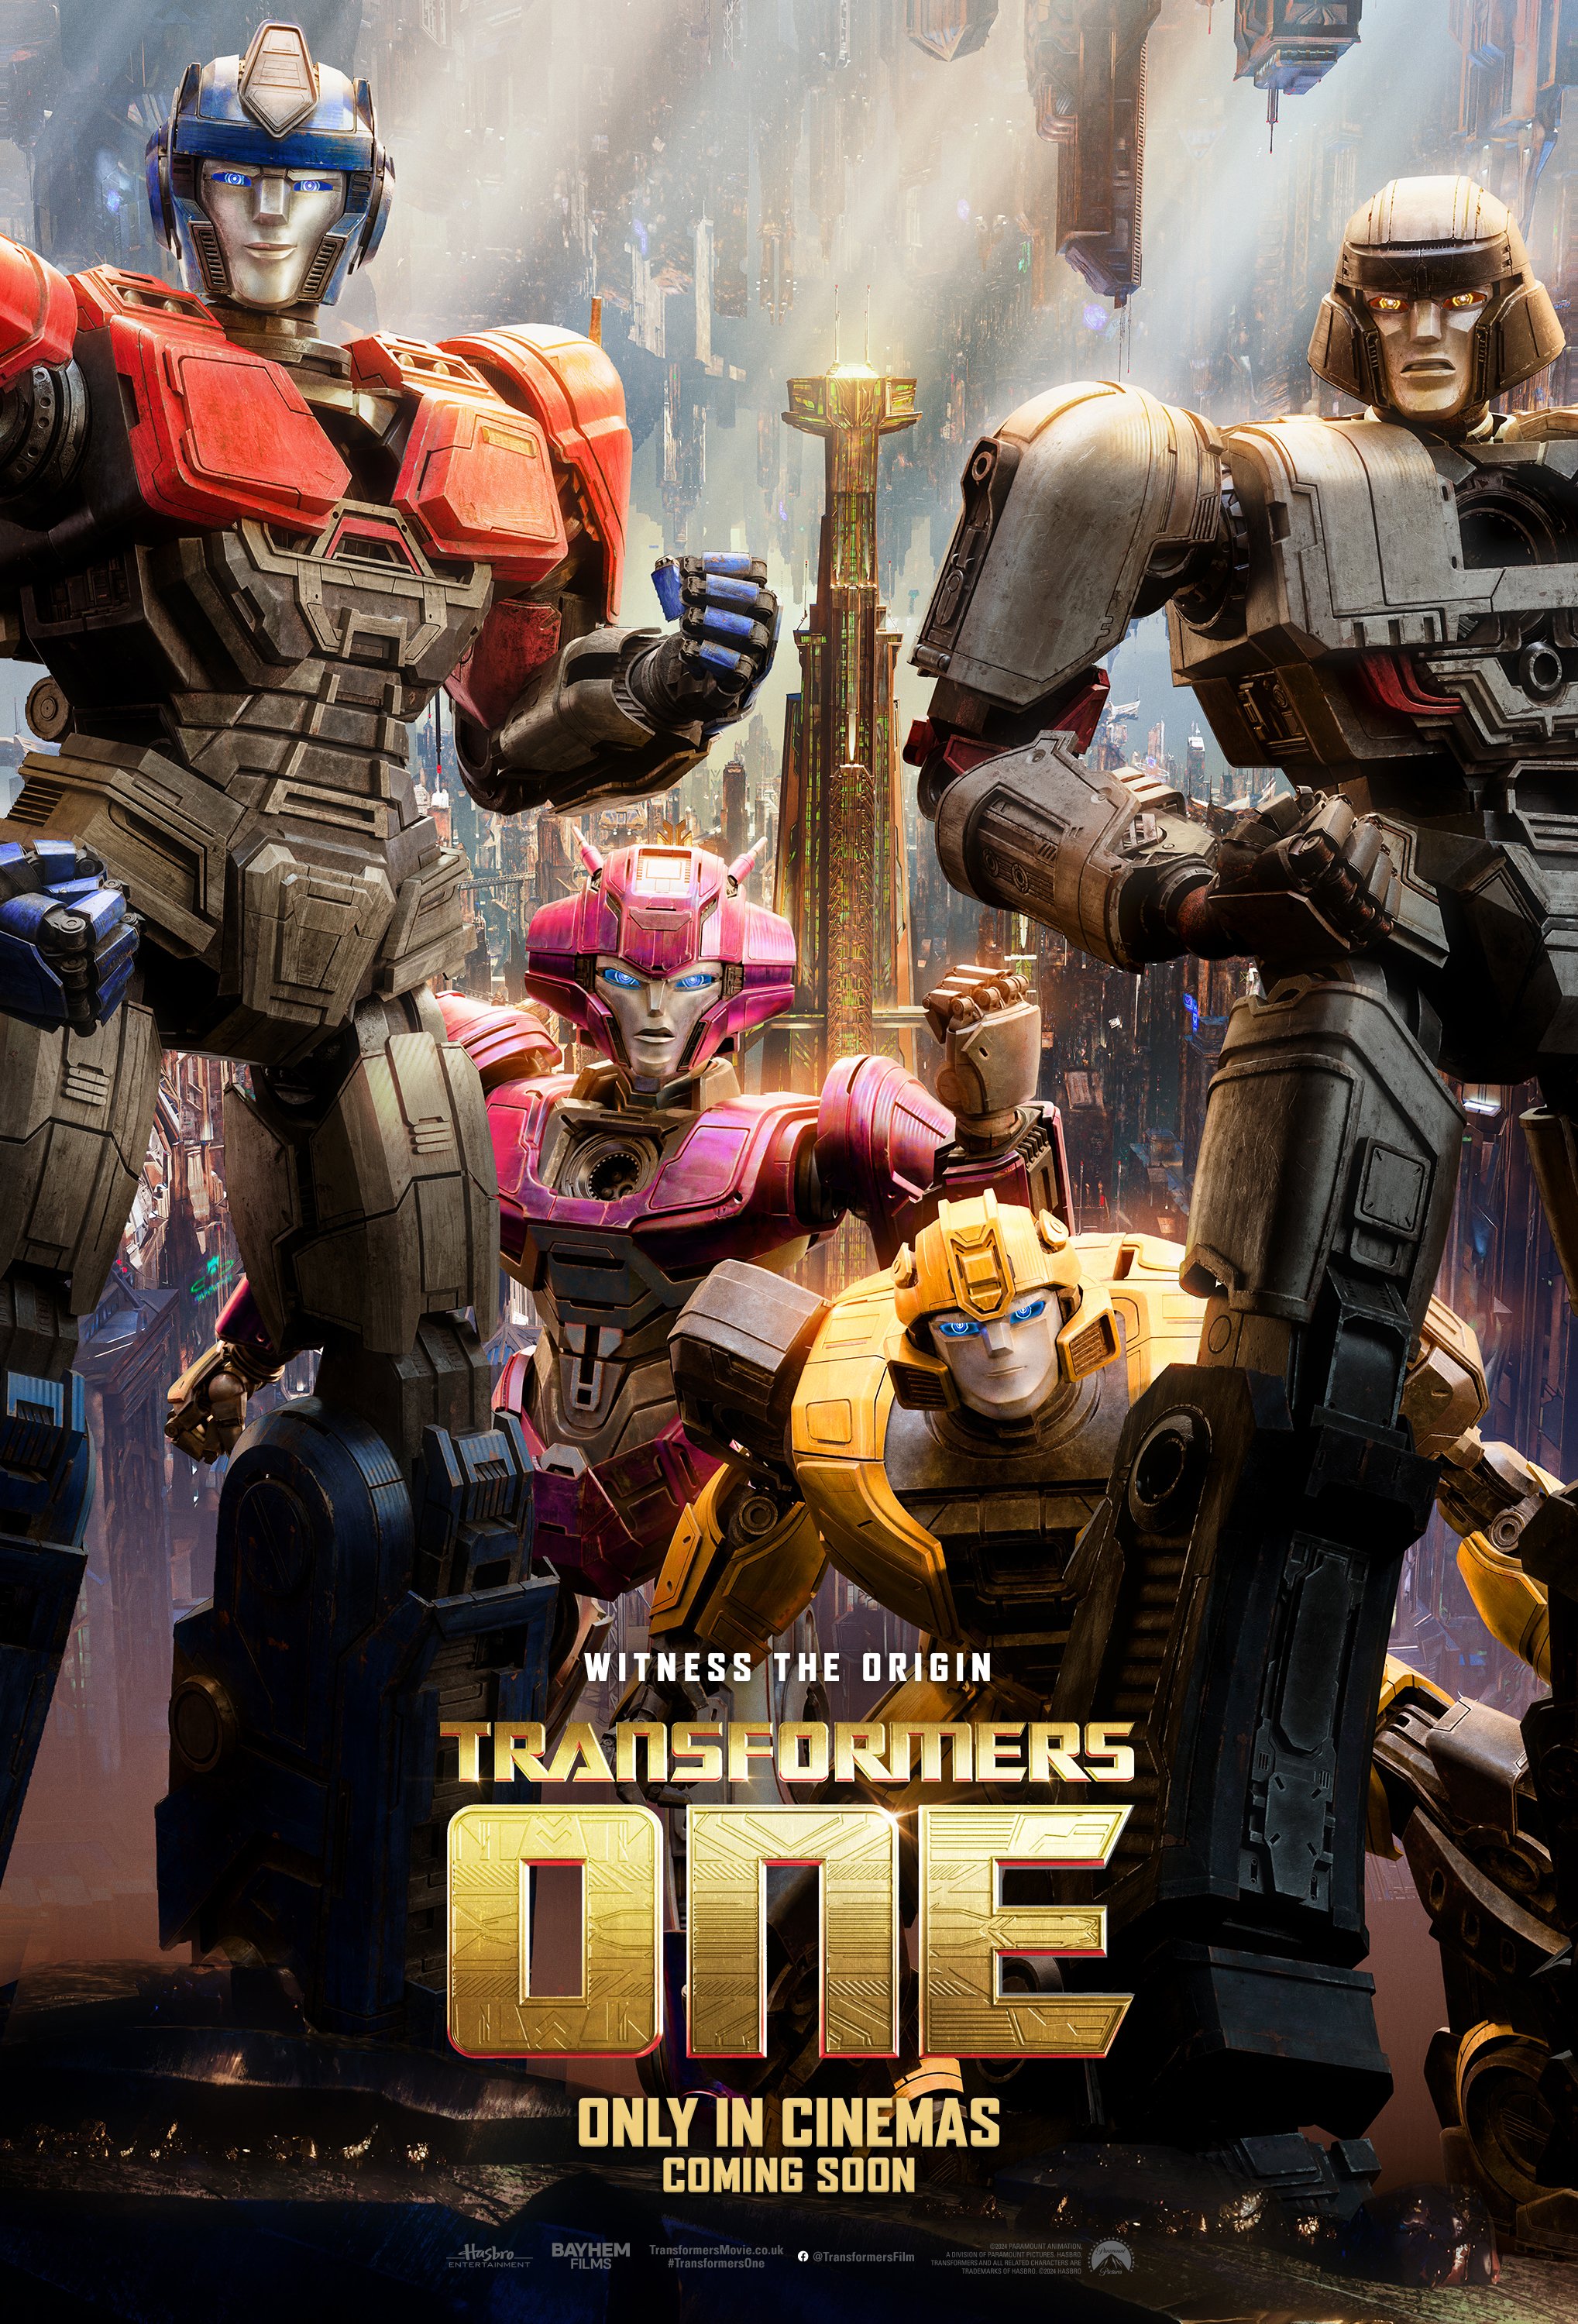 Transformers One lanza su primer avance 5